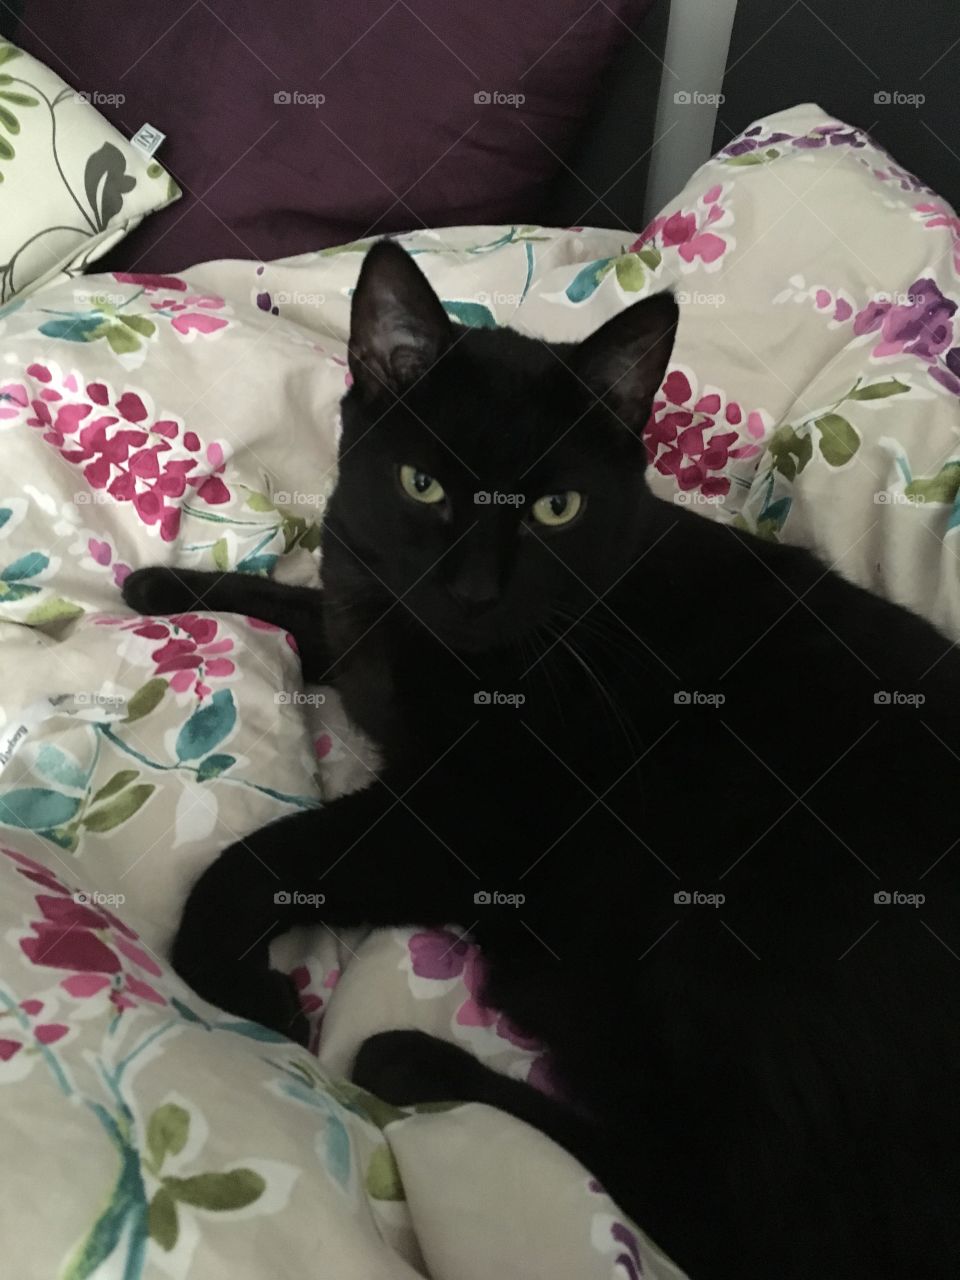 Black cat in bed 